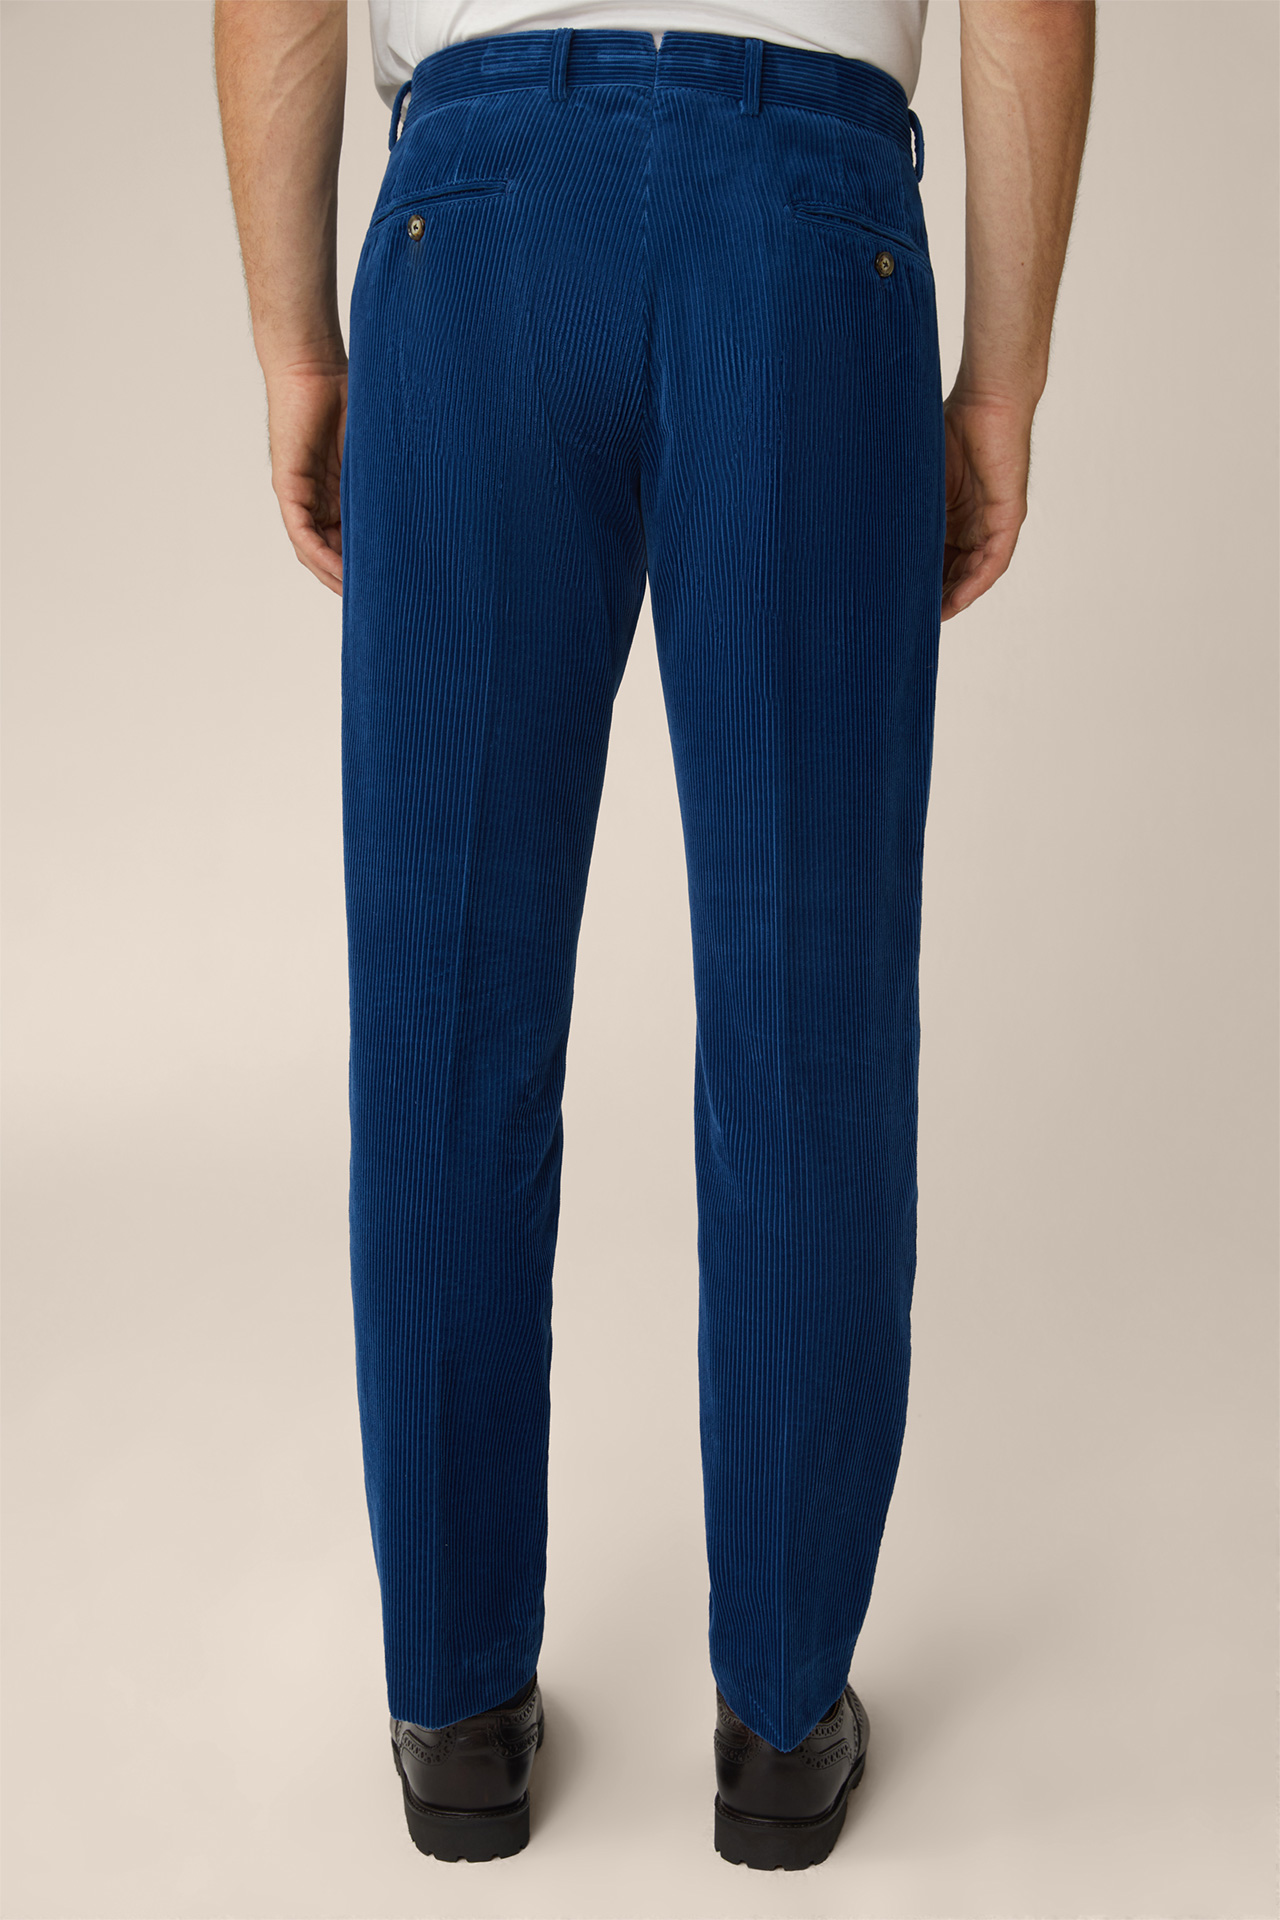 Santios Modular Corduroy Trousers in Royal Blue